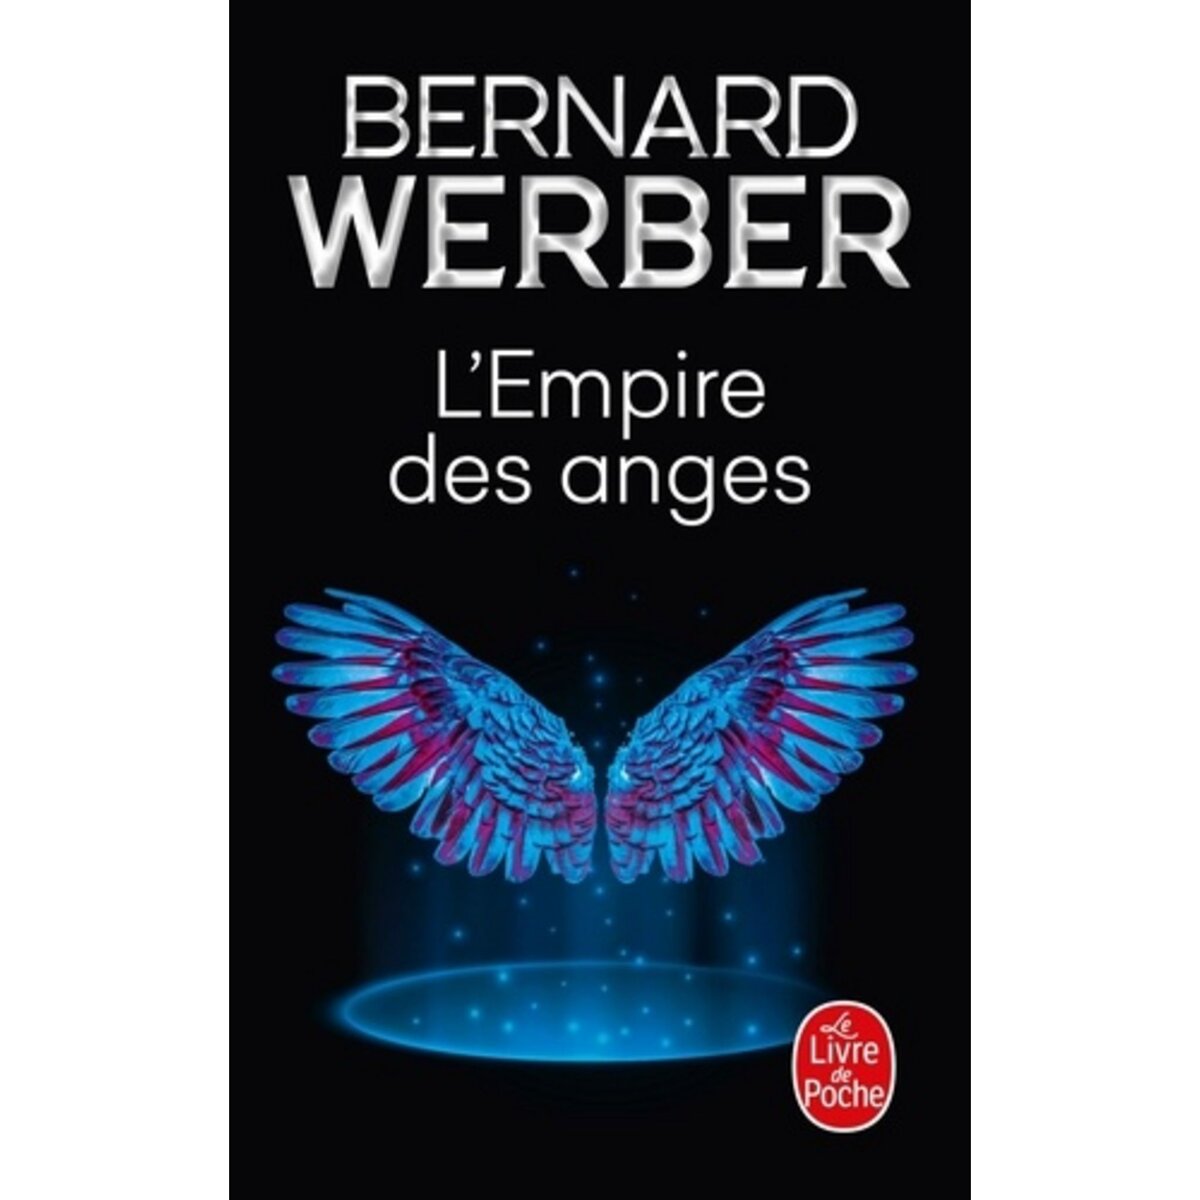  CYCLE DES ANGES TOME 2 : L'EMPIRE DES ANGES, Werber Bernard